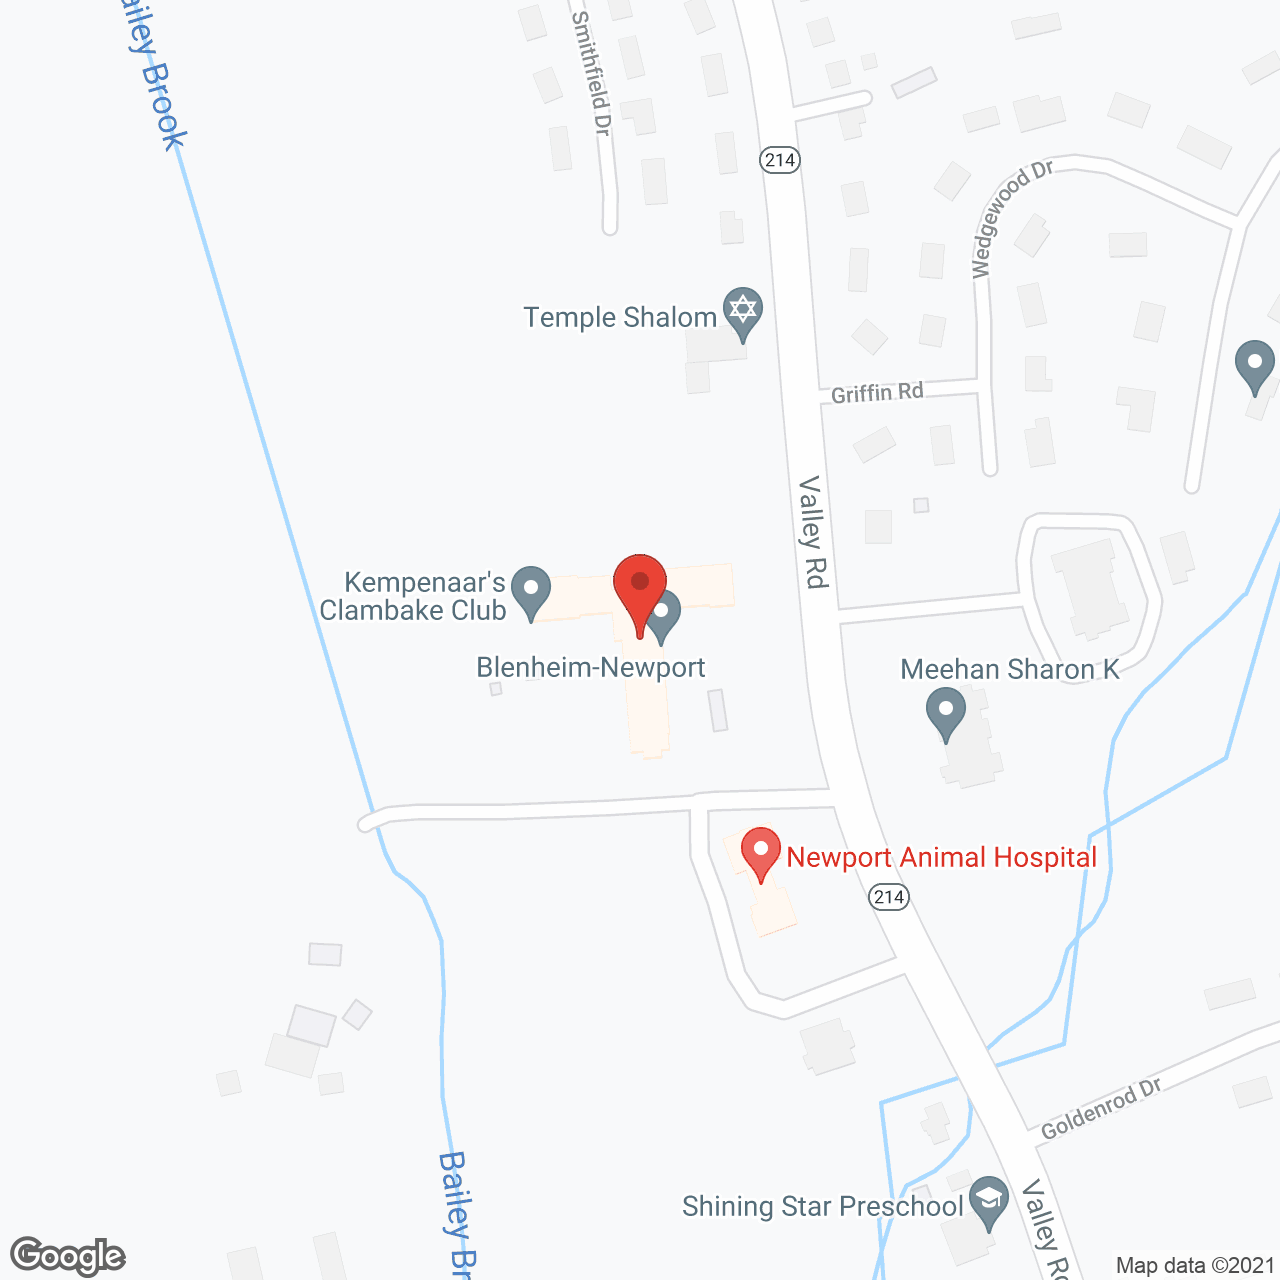 Blenheim-Newport in google map